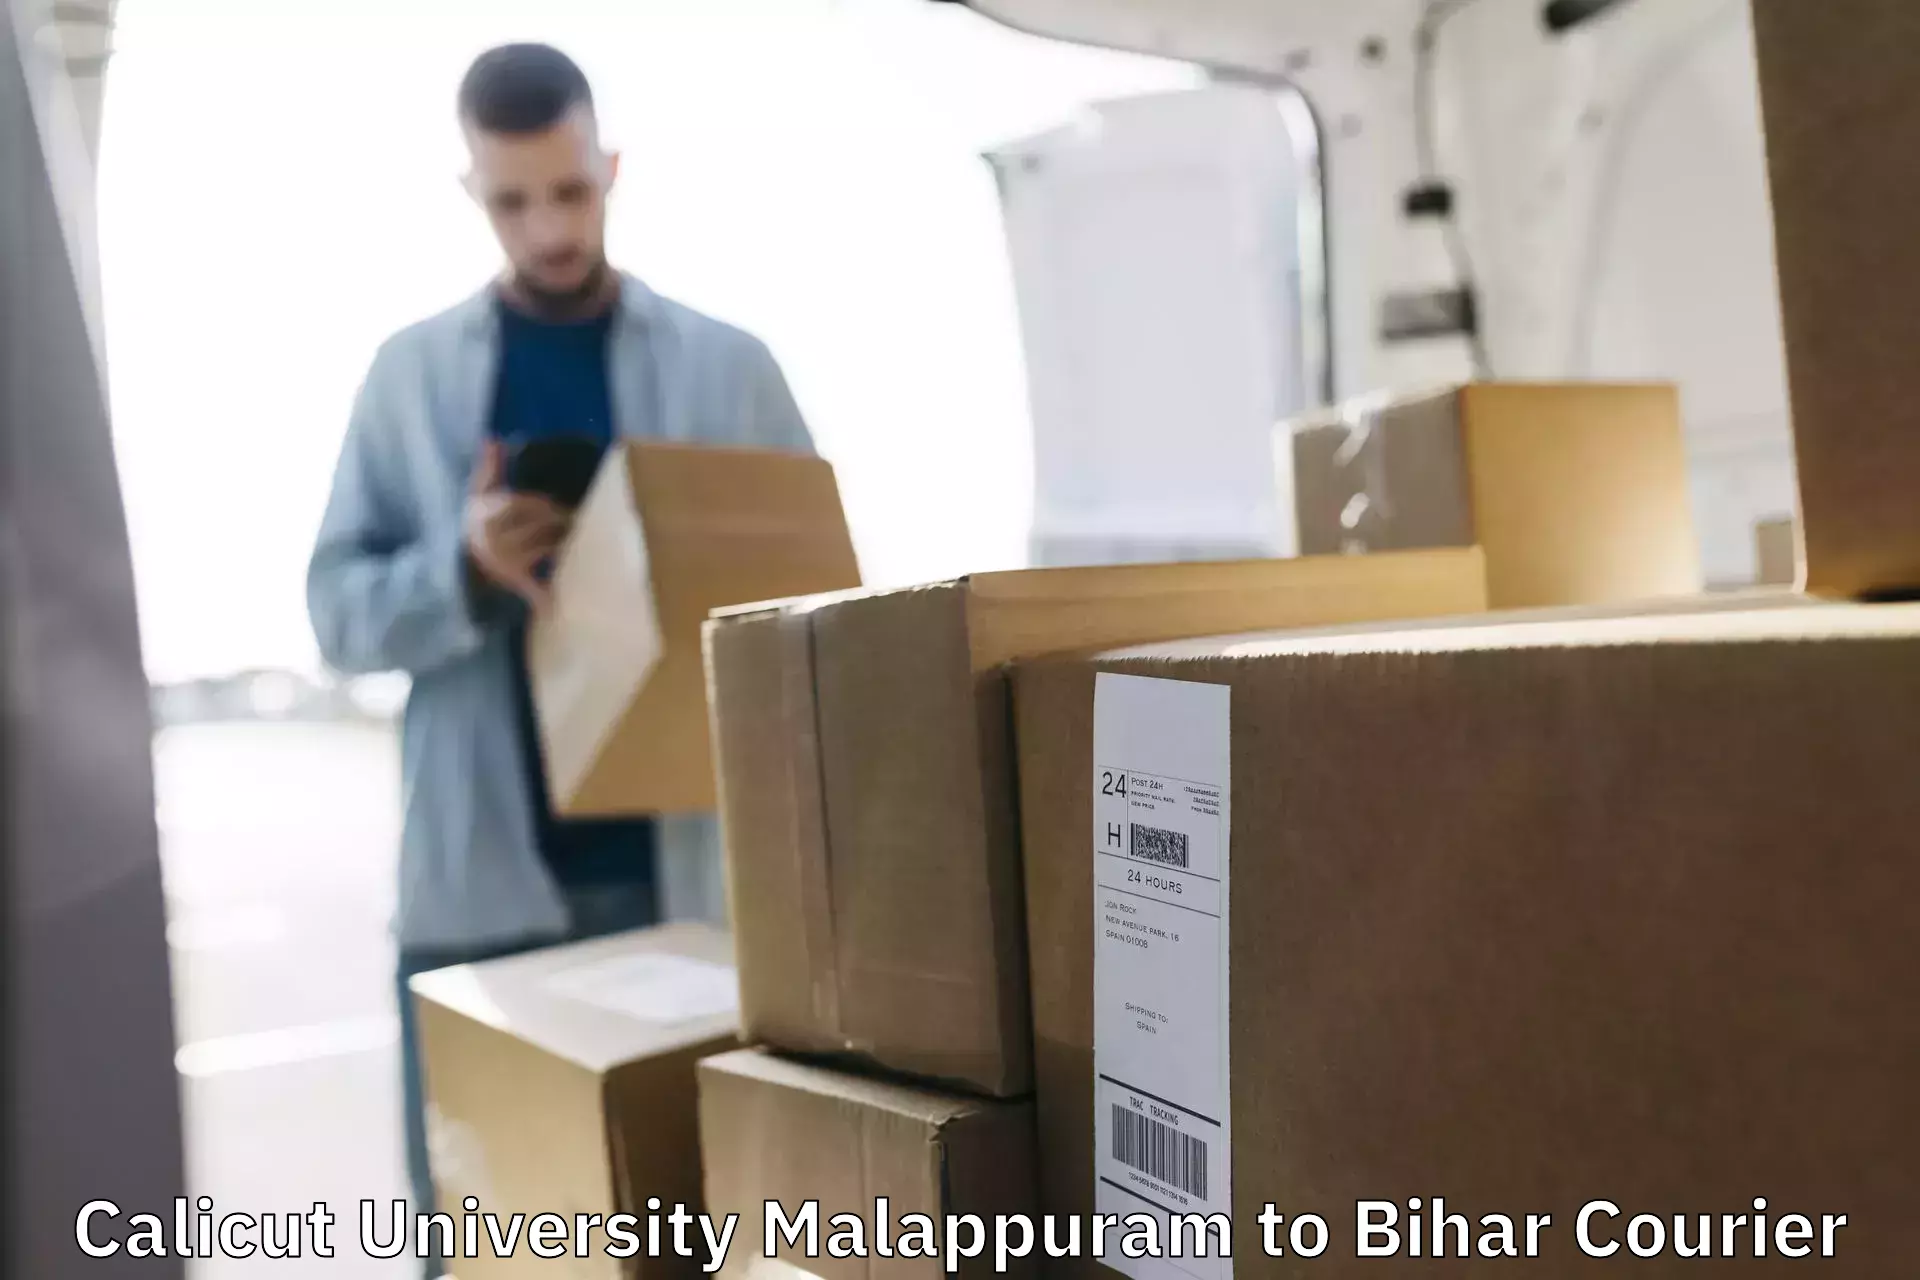 Courier service booking Calicut University Malappuram to Bhojpur